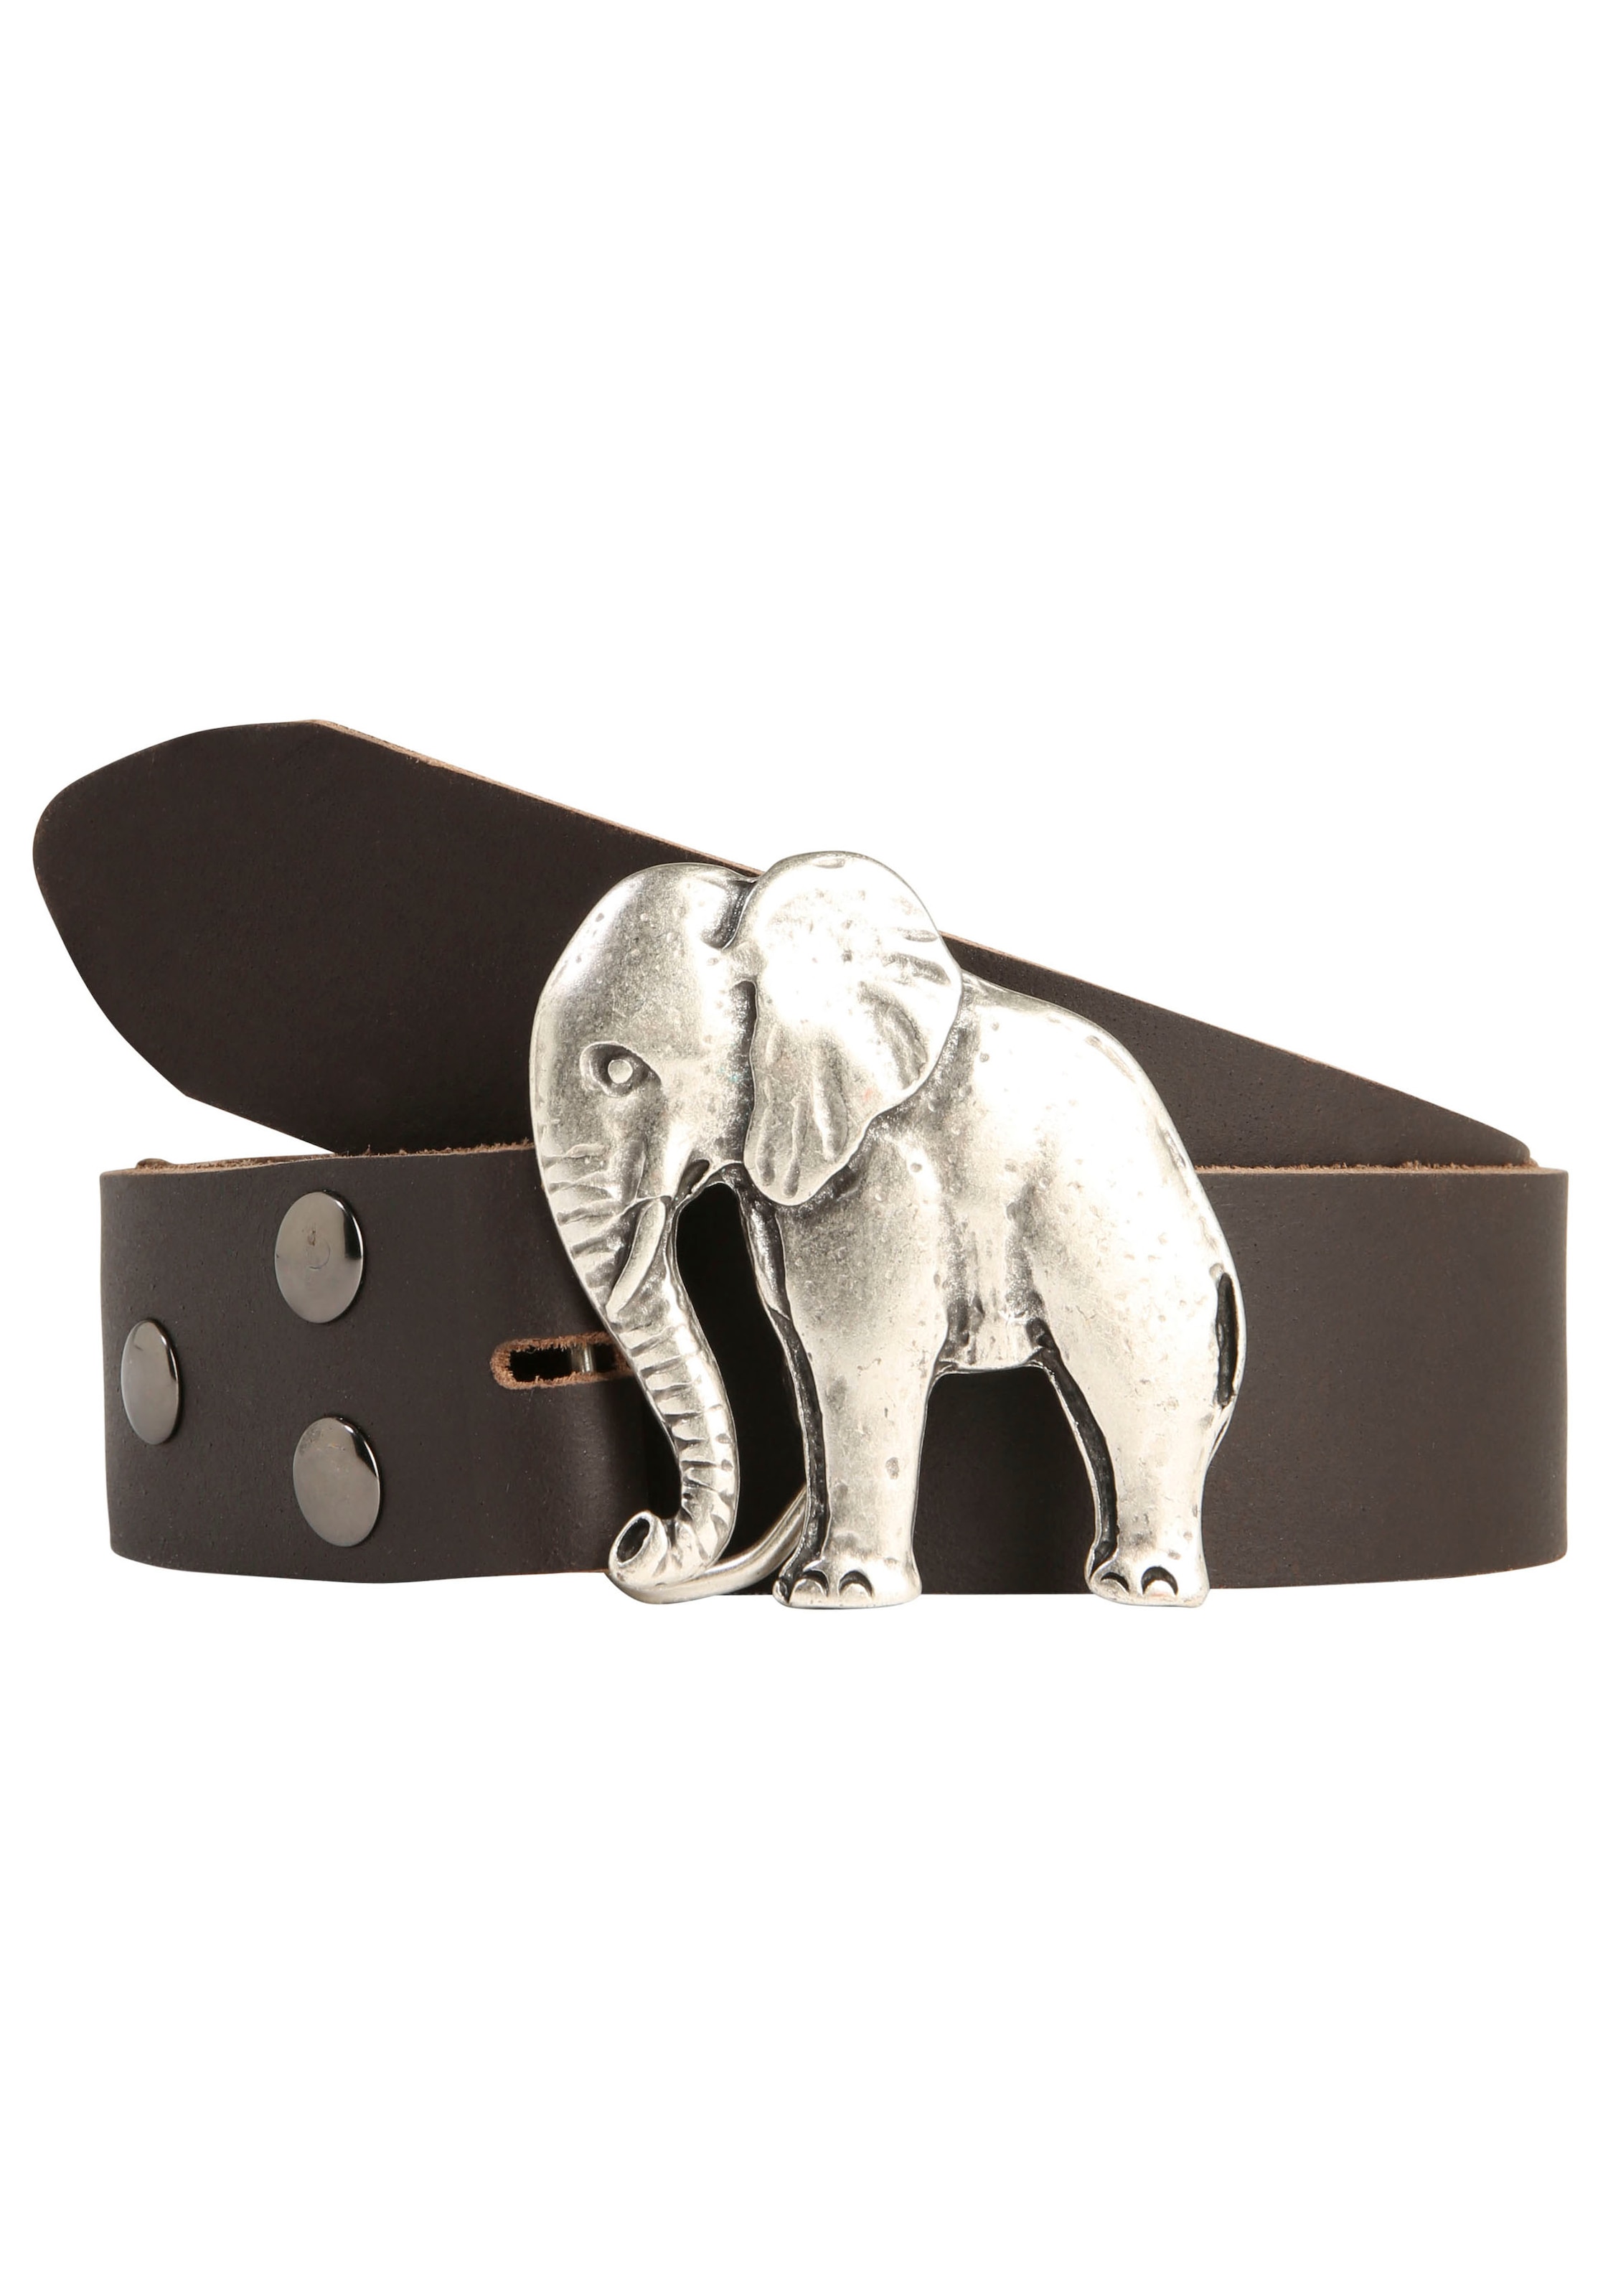 Mode Acheter en ligne RETTUNGSRING 019° Elefant à by showroom Vintage-Look, Ledergürtel, Schliesse prix bas austauschbar